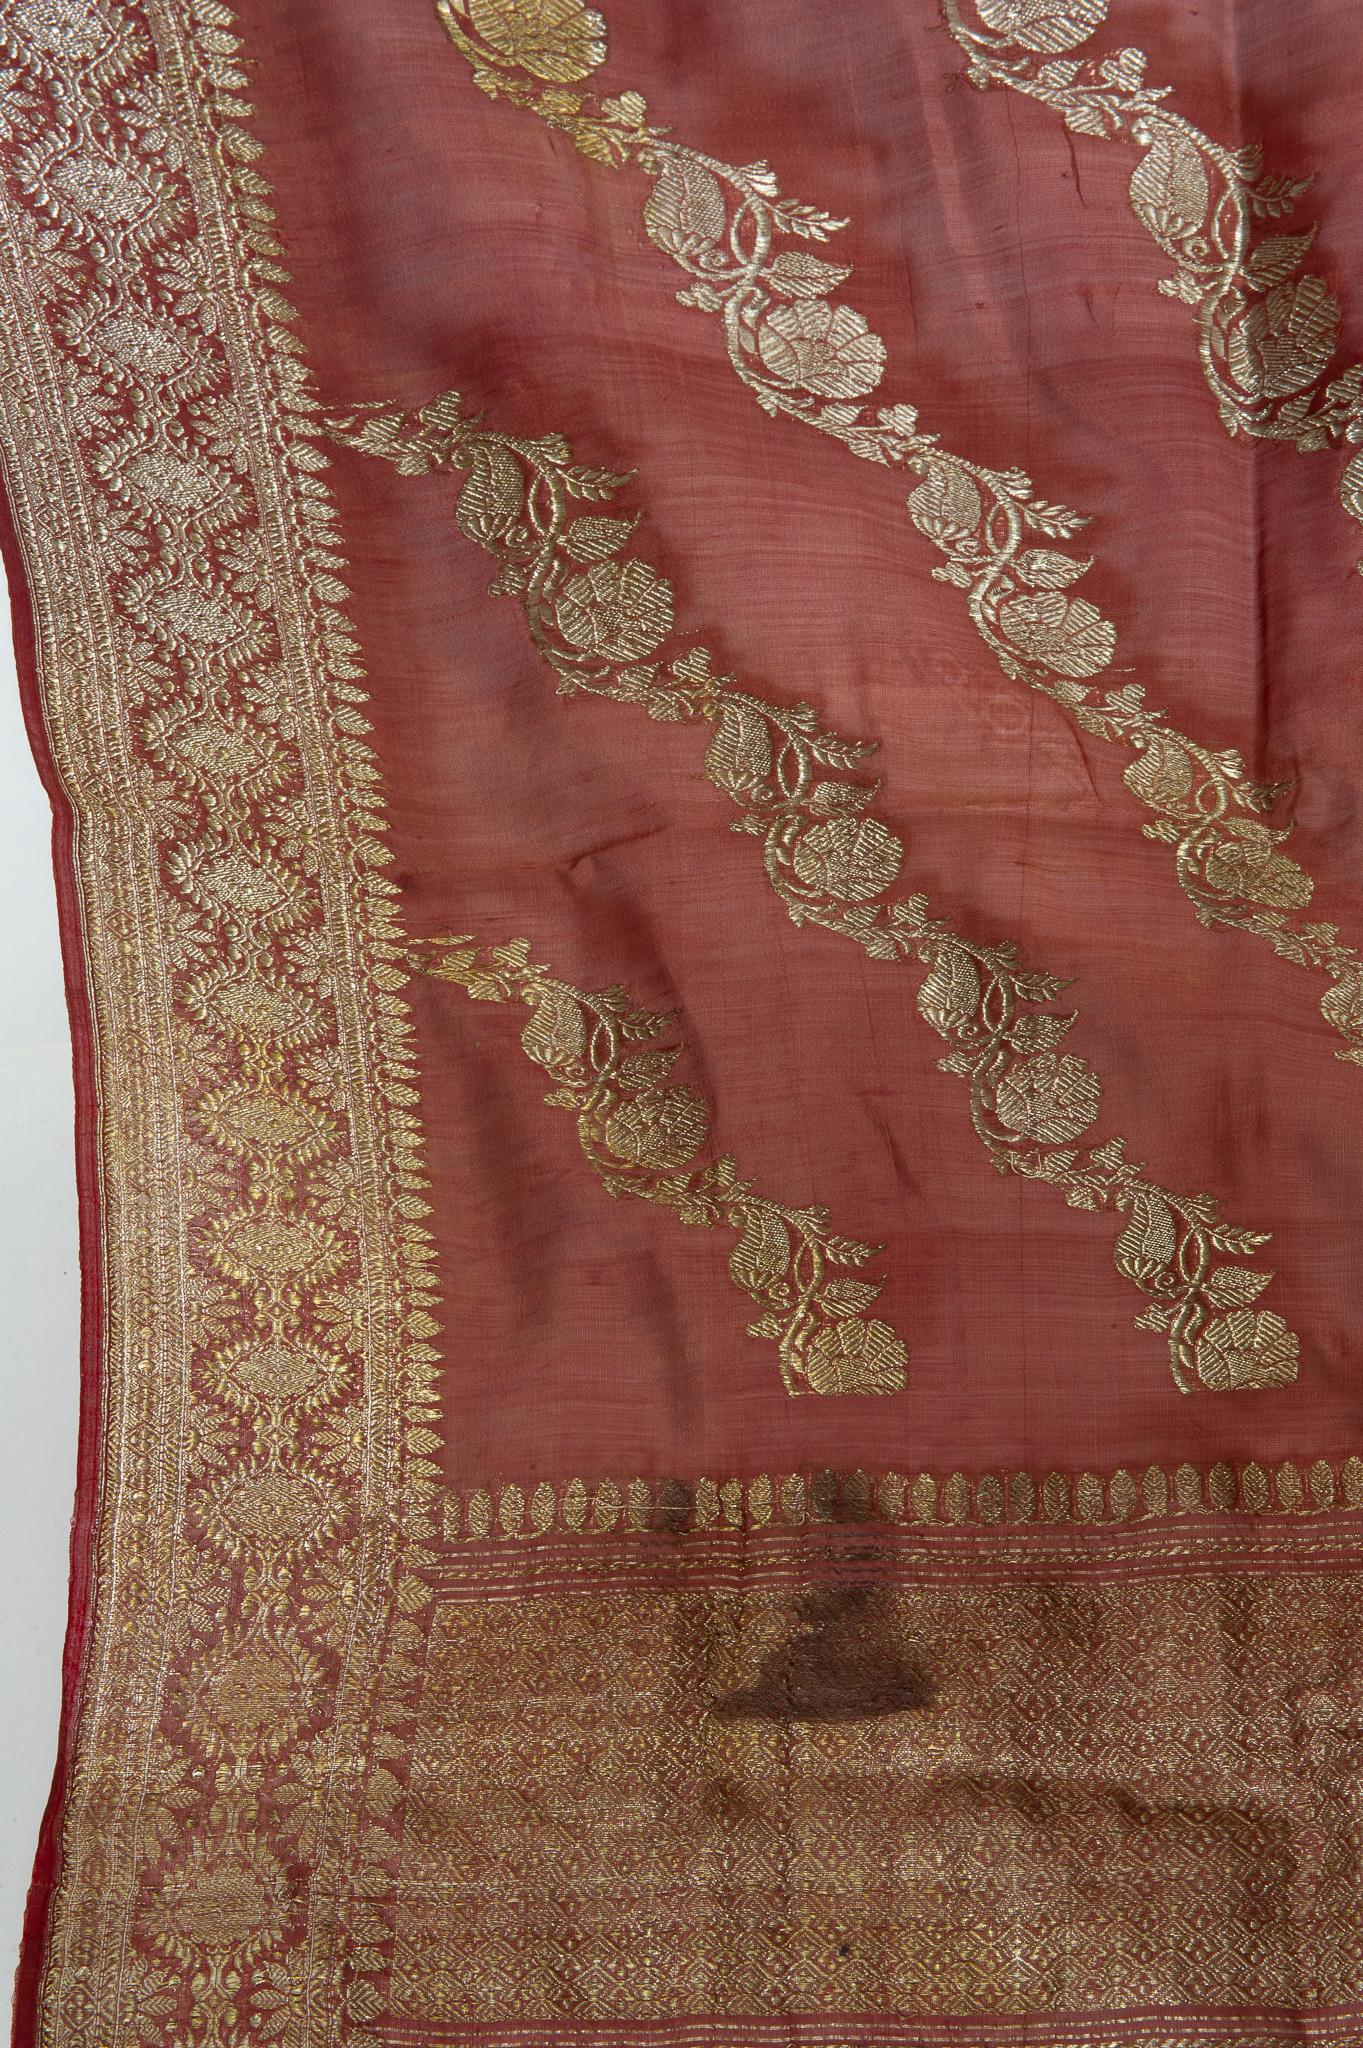 Vintage Indian Sari Mauve Color for Curtains or Evening Dress For Sale 3